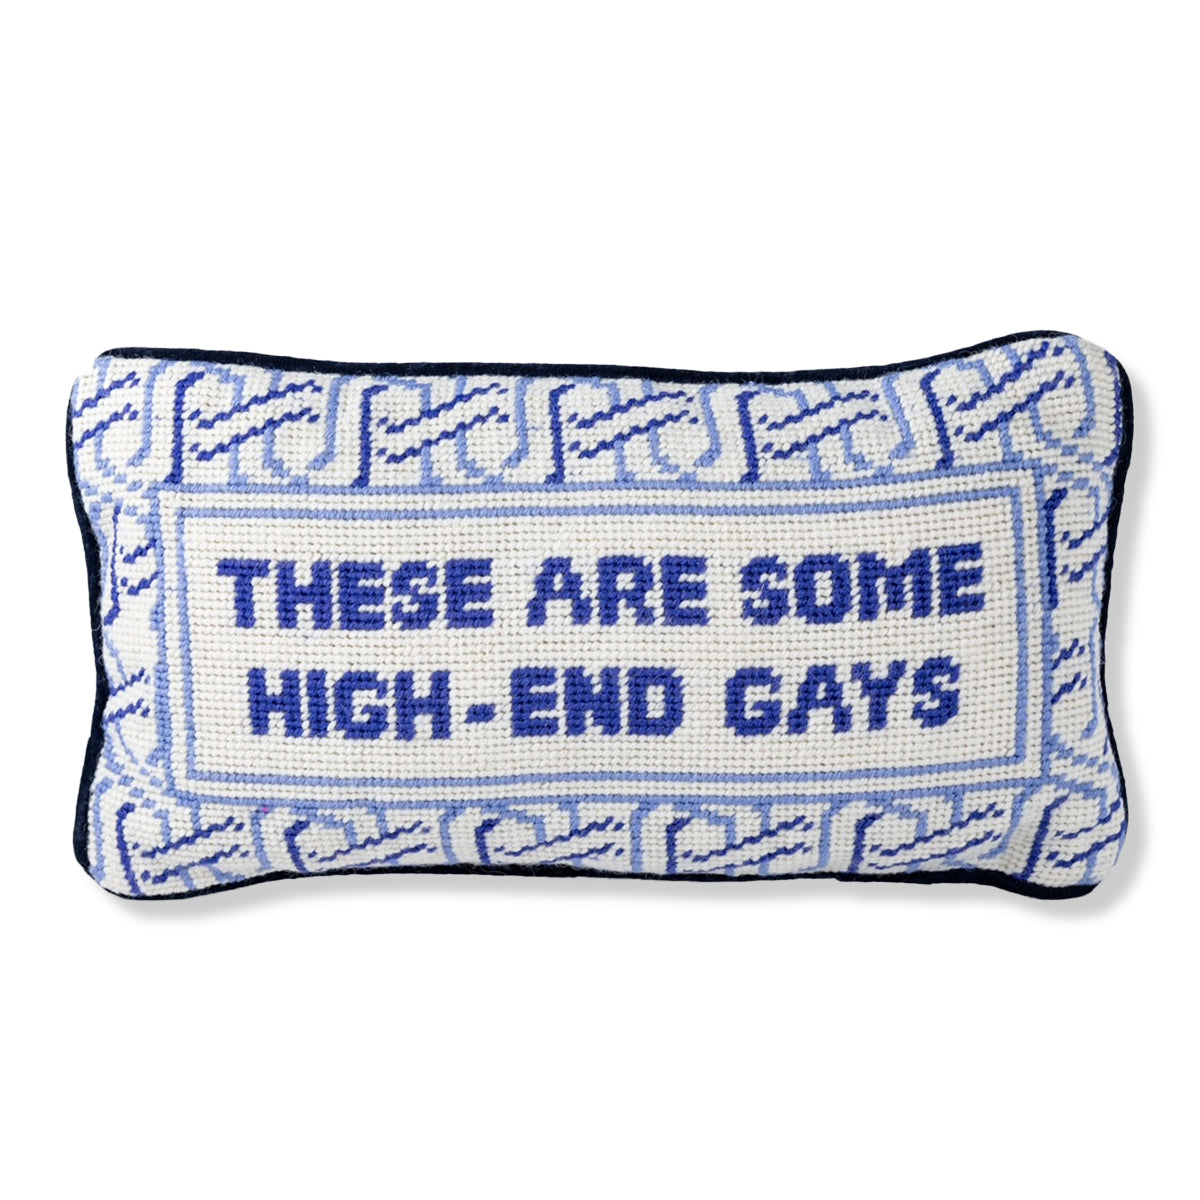 HIGH-END GAYS Needlepoint Cushion